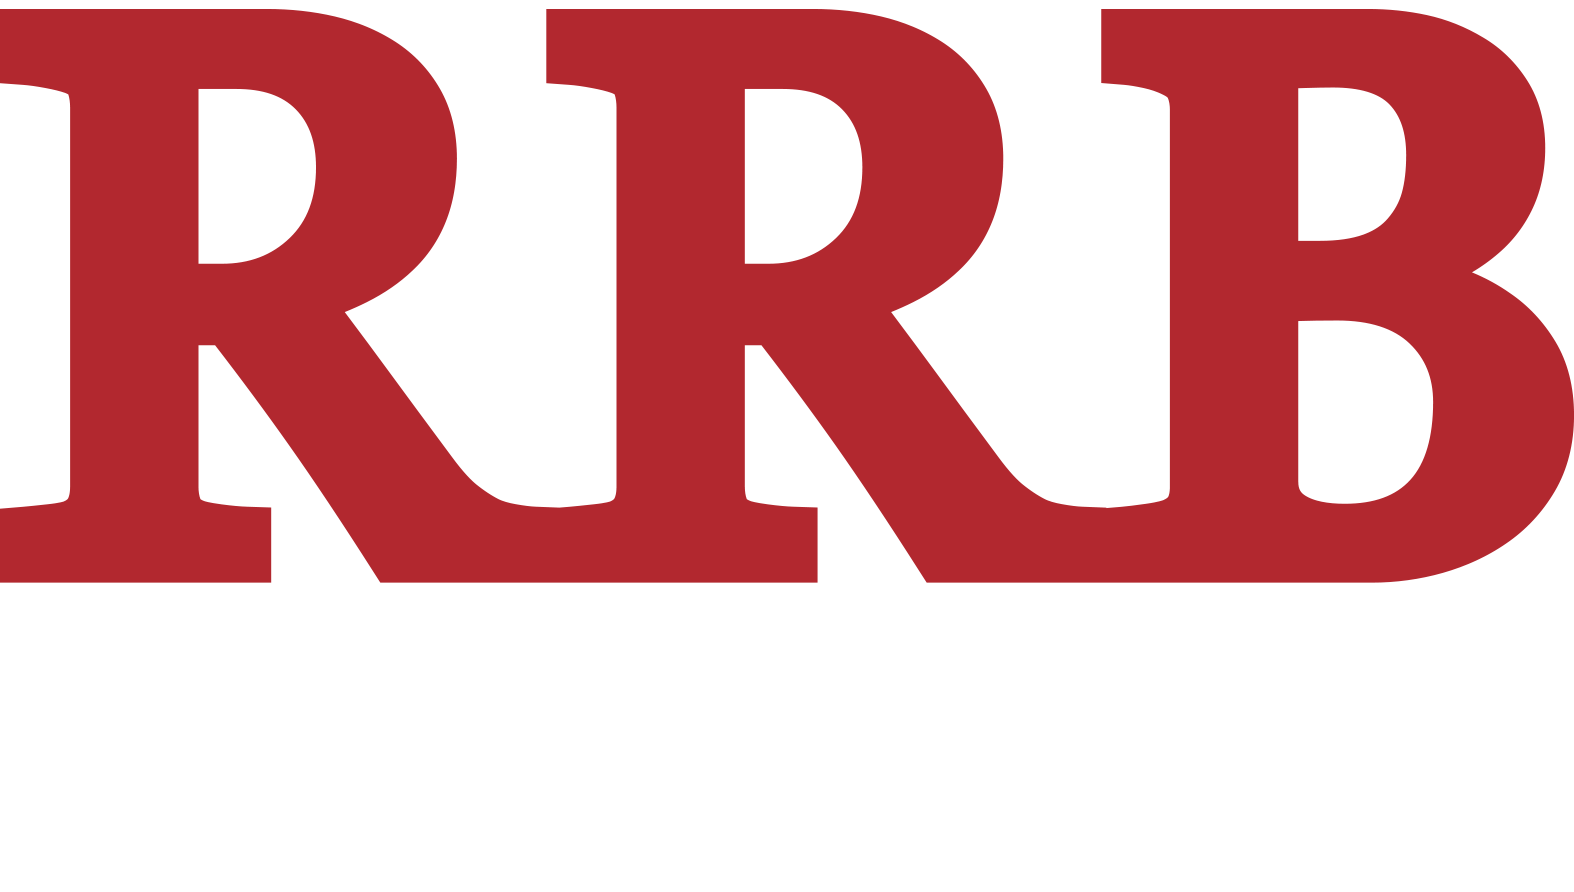 RRB Logo 1574x1130